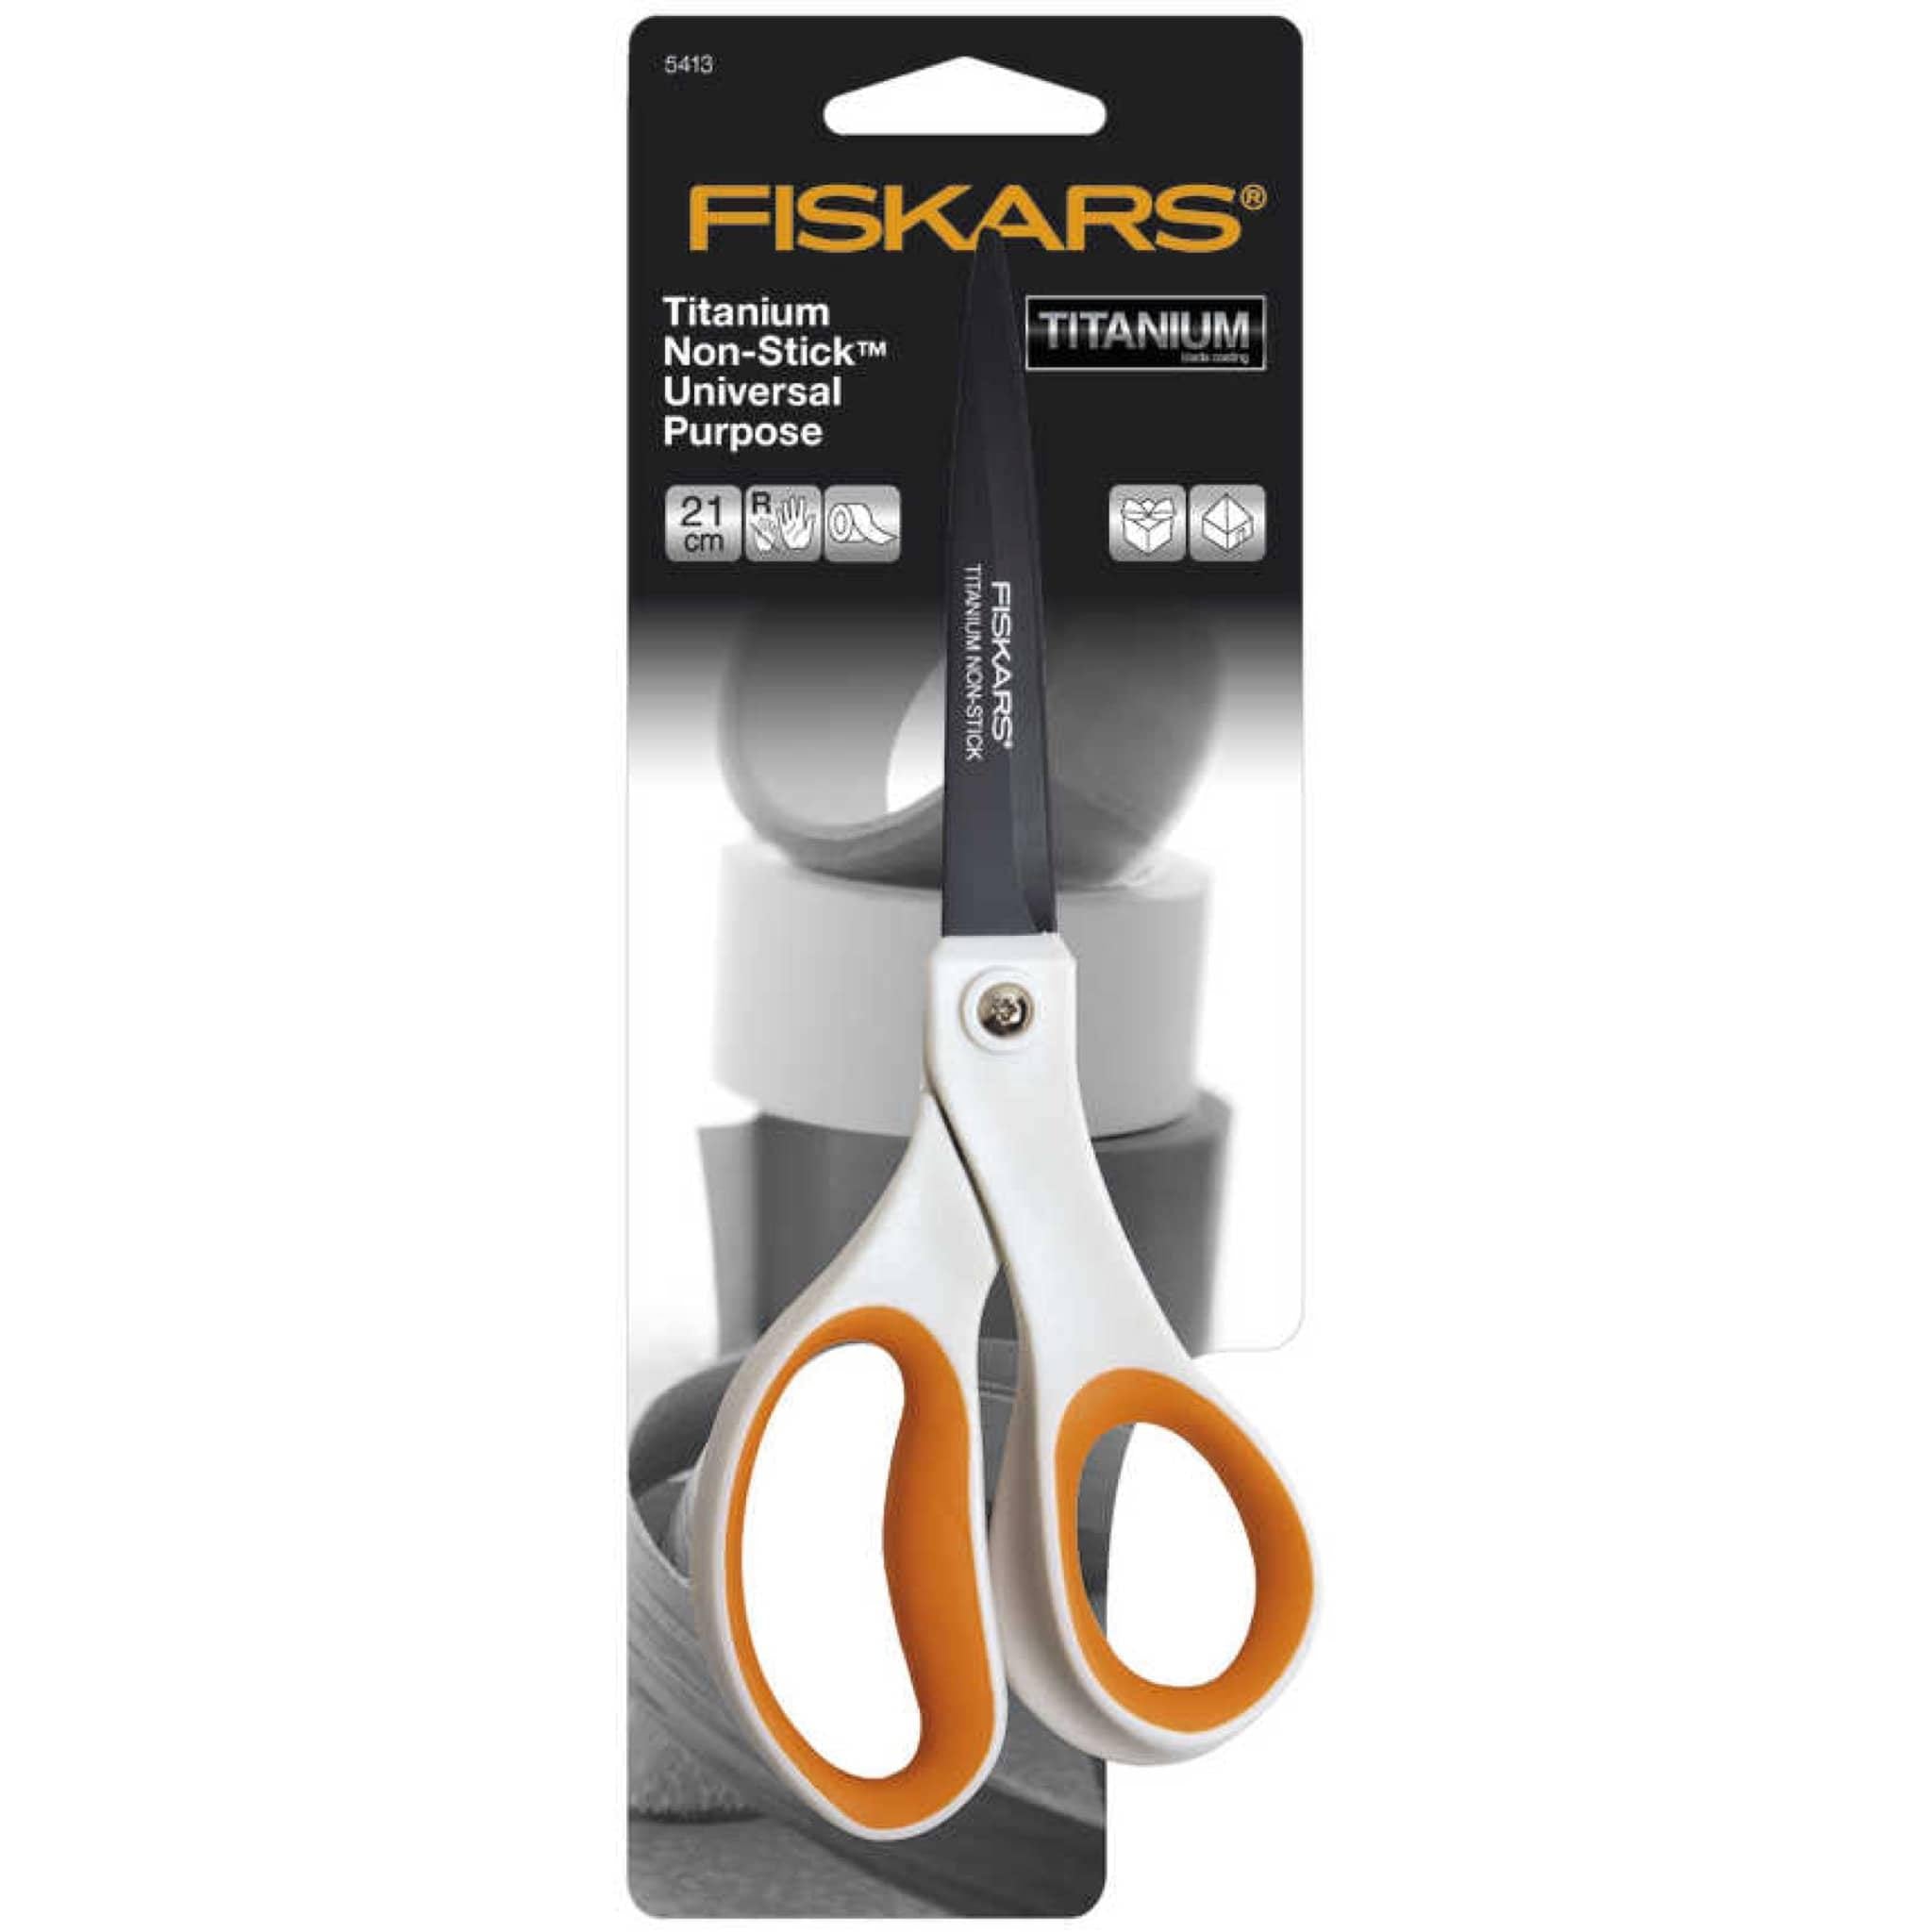 Fiskars Titanium Non-stick Universal Purpose scissors (21cm) - Woolshop.co.uk